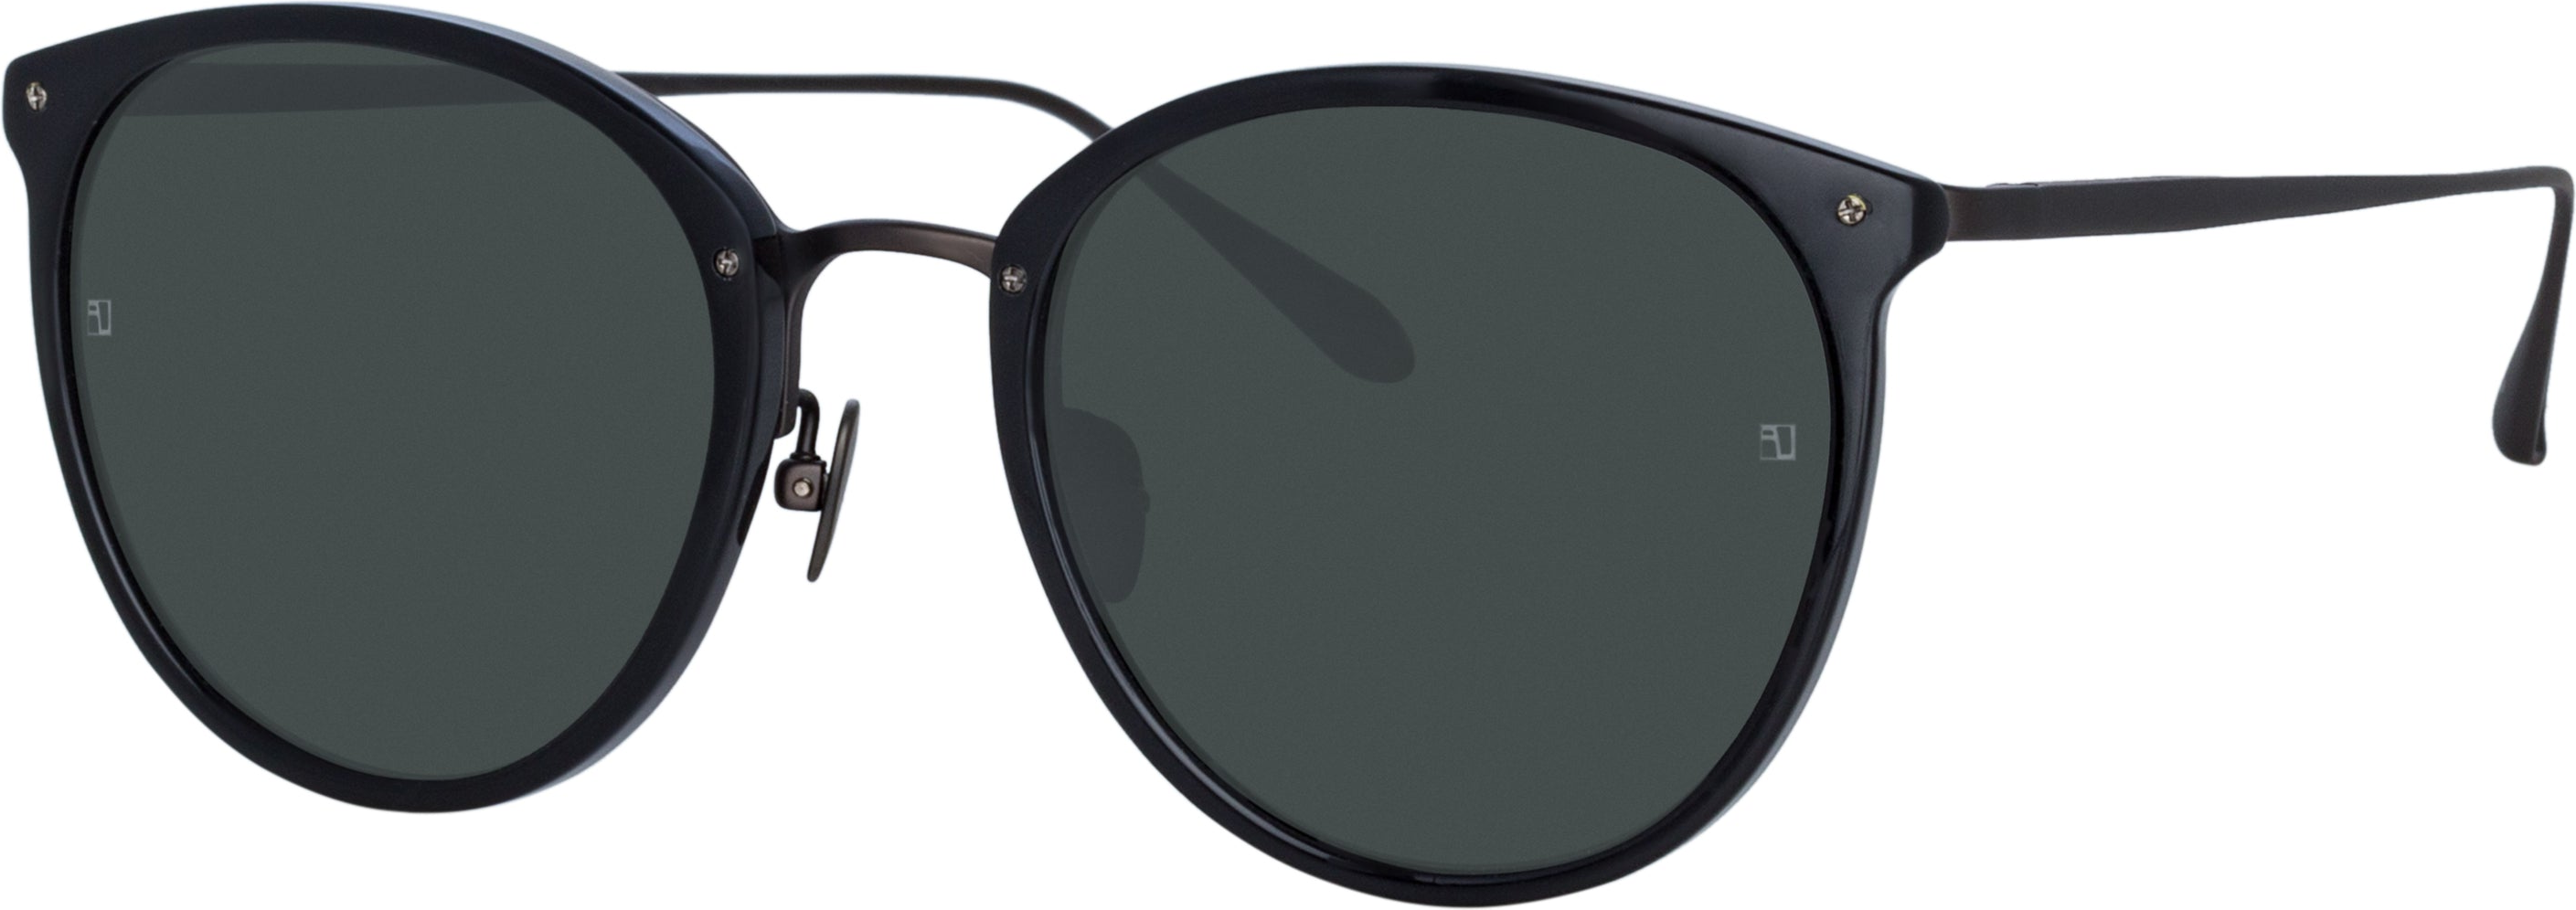 Color_LFL251C79SUN - Calthorpe Oval Sunglasses in Black and Matt Nickel